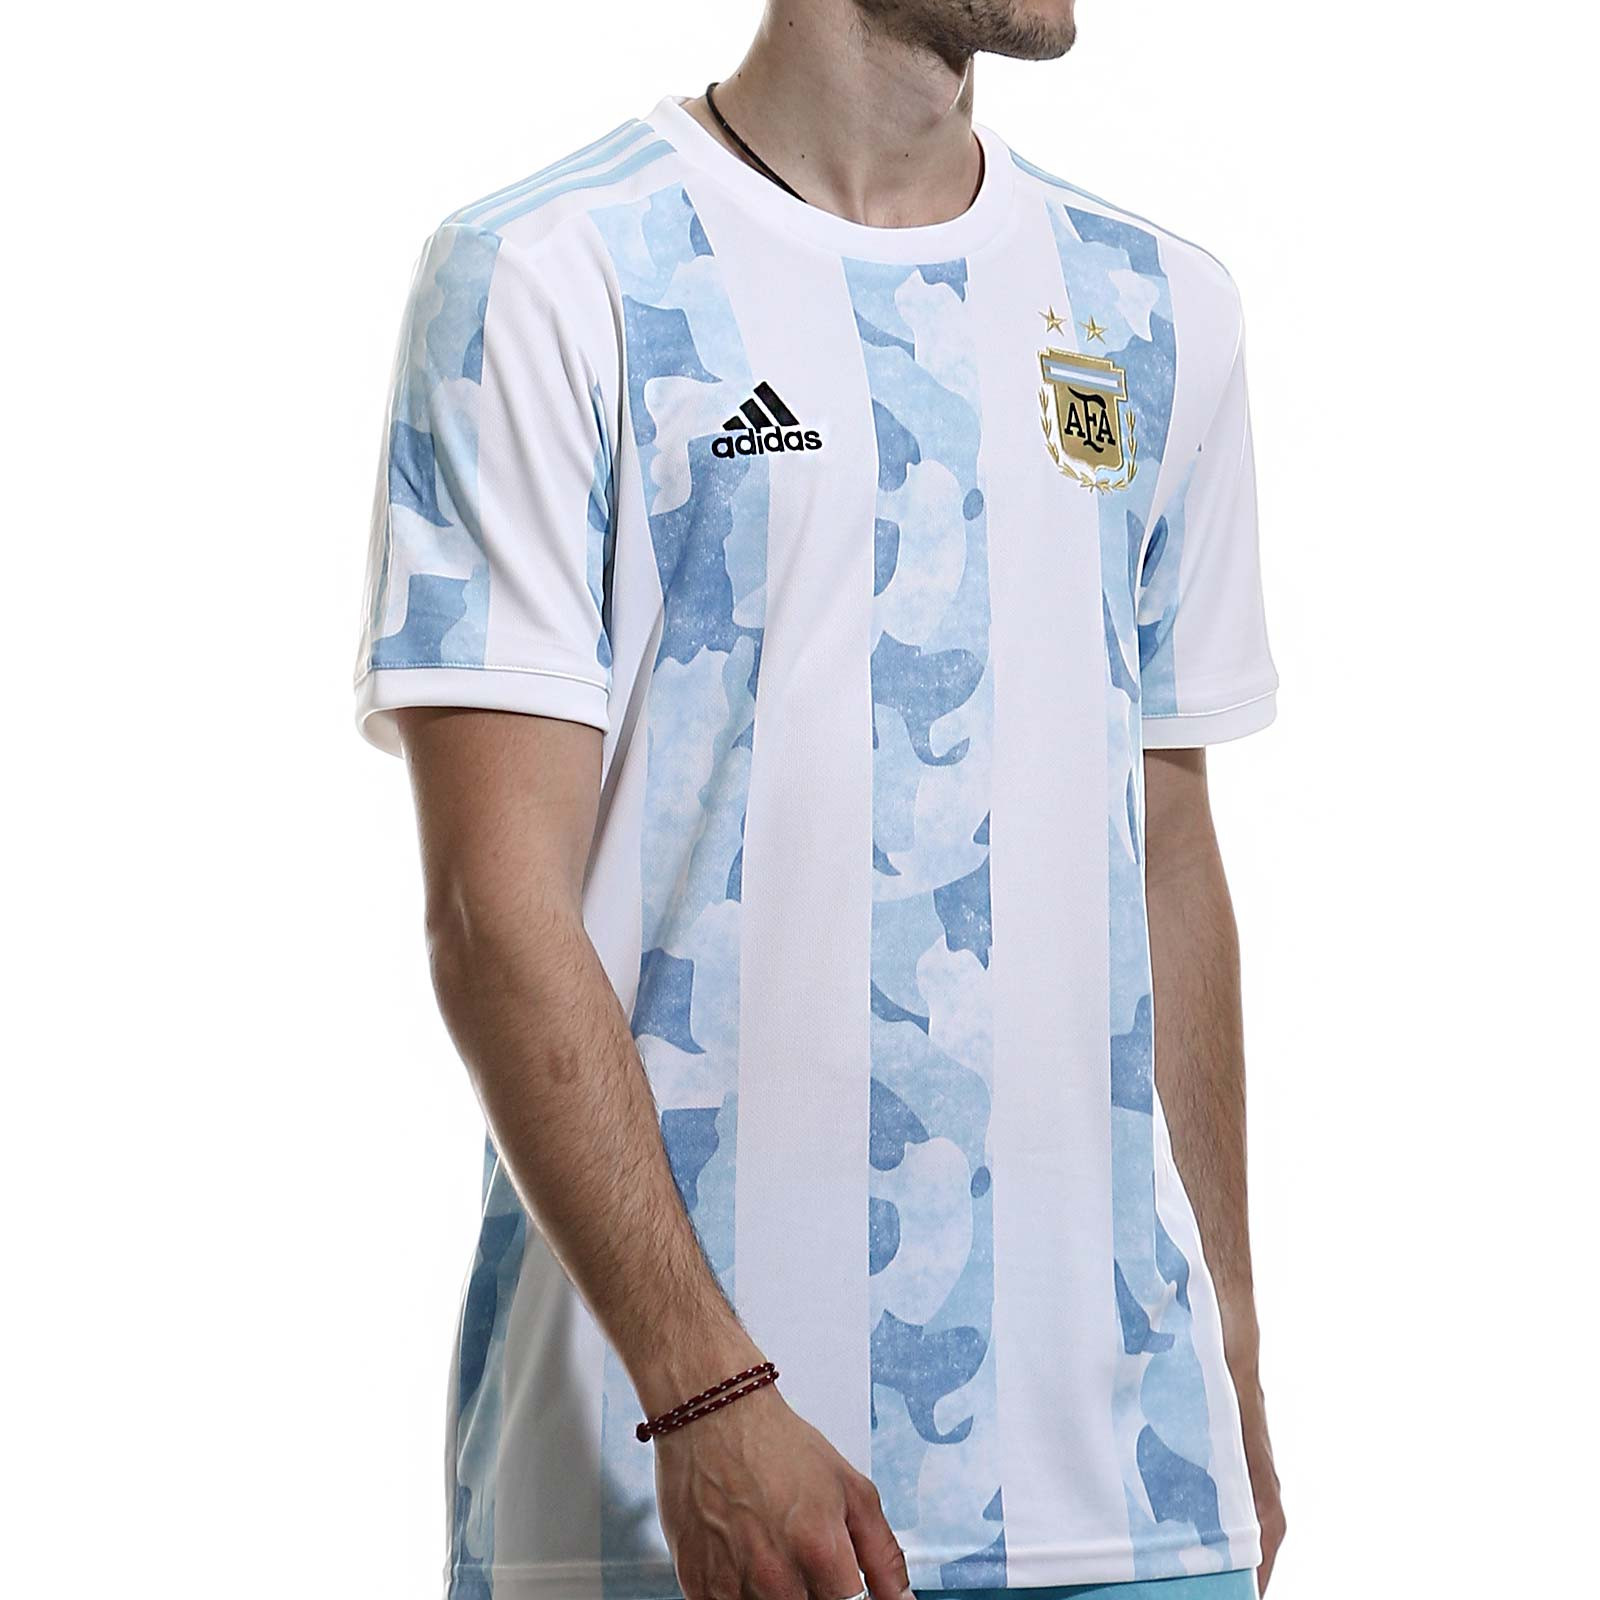 Camiseta adidas 2021 blanca y azul | futbolmania